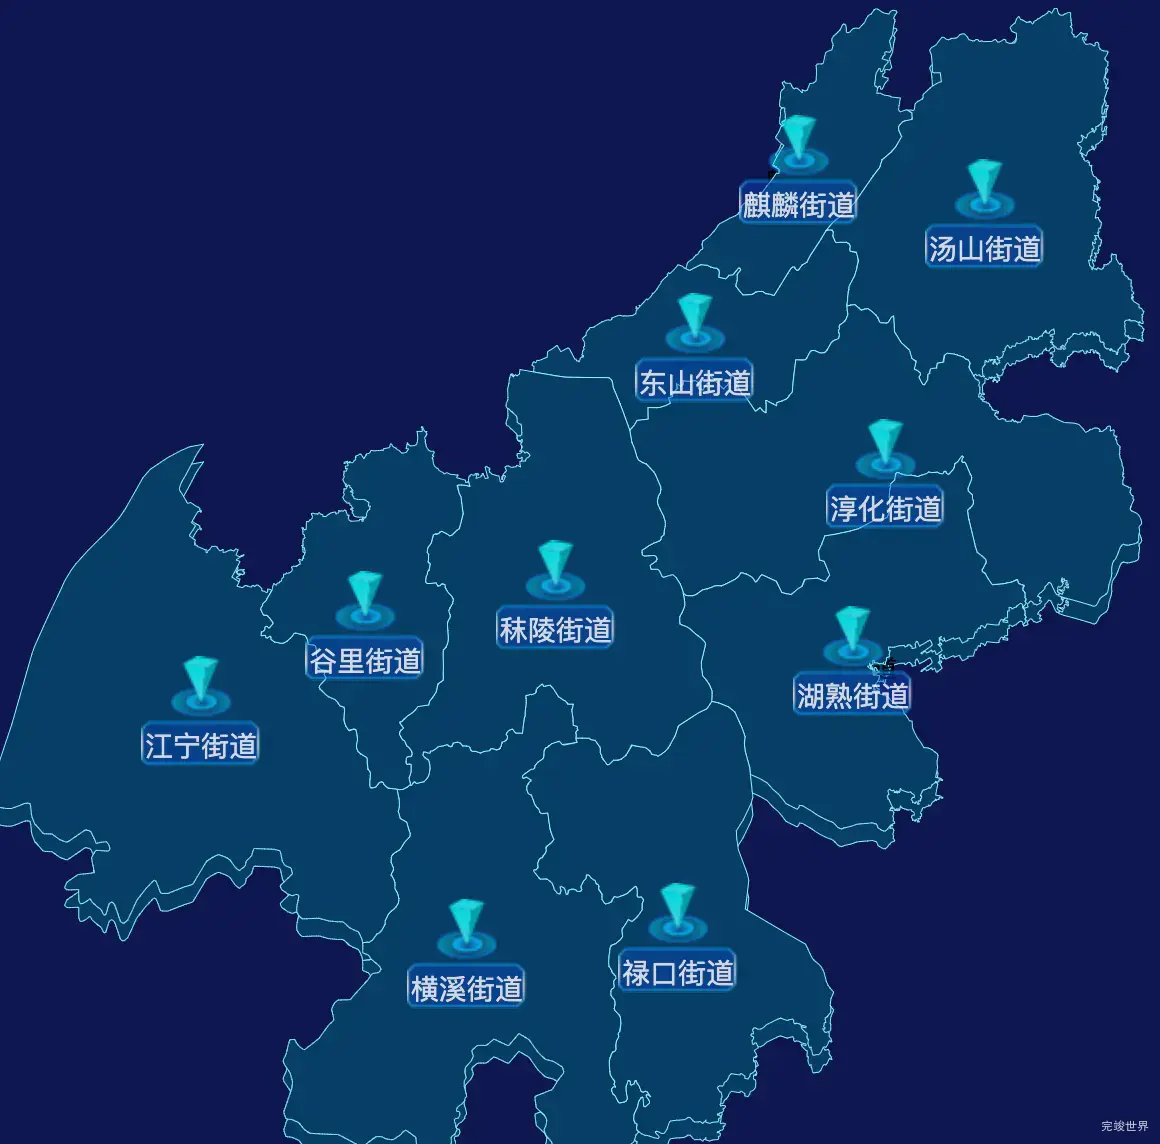 echarts南京市江宁区geoJson地图点击跳转到指定页面